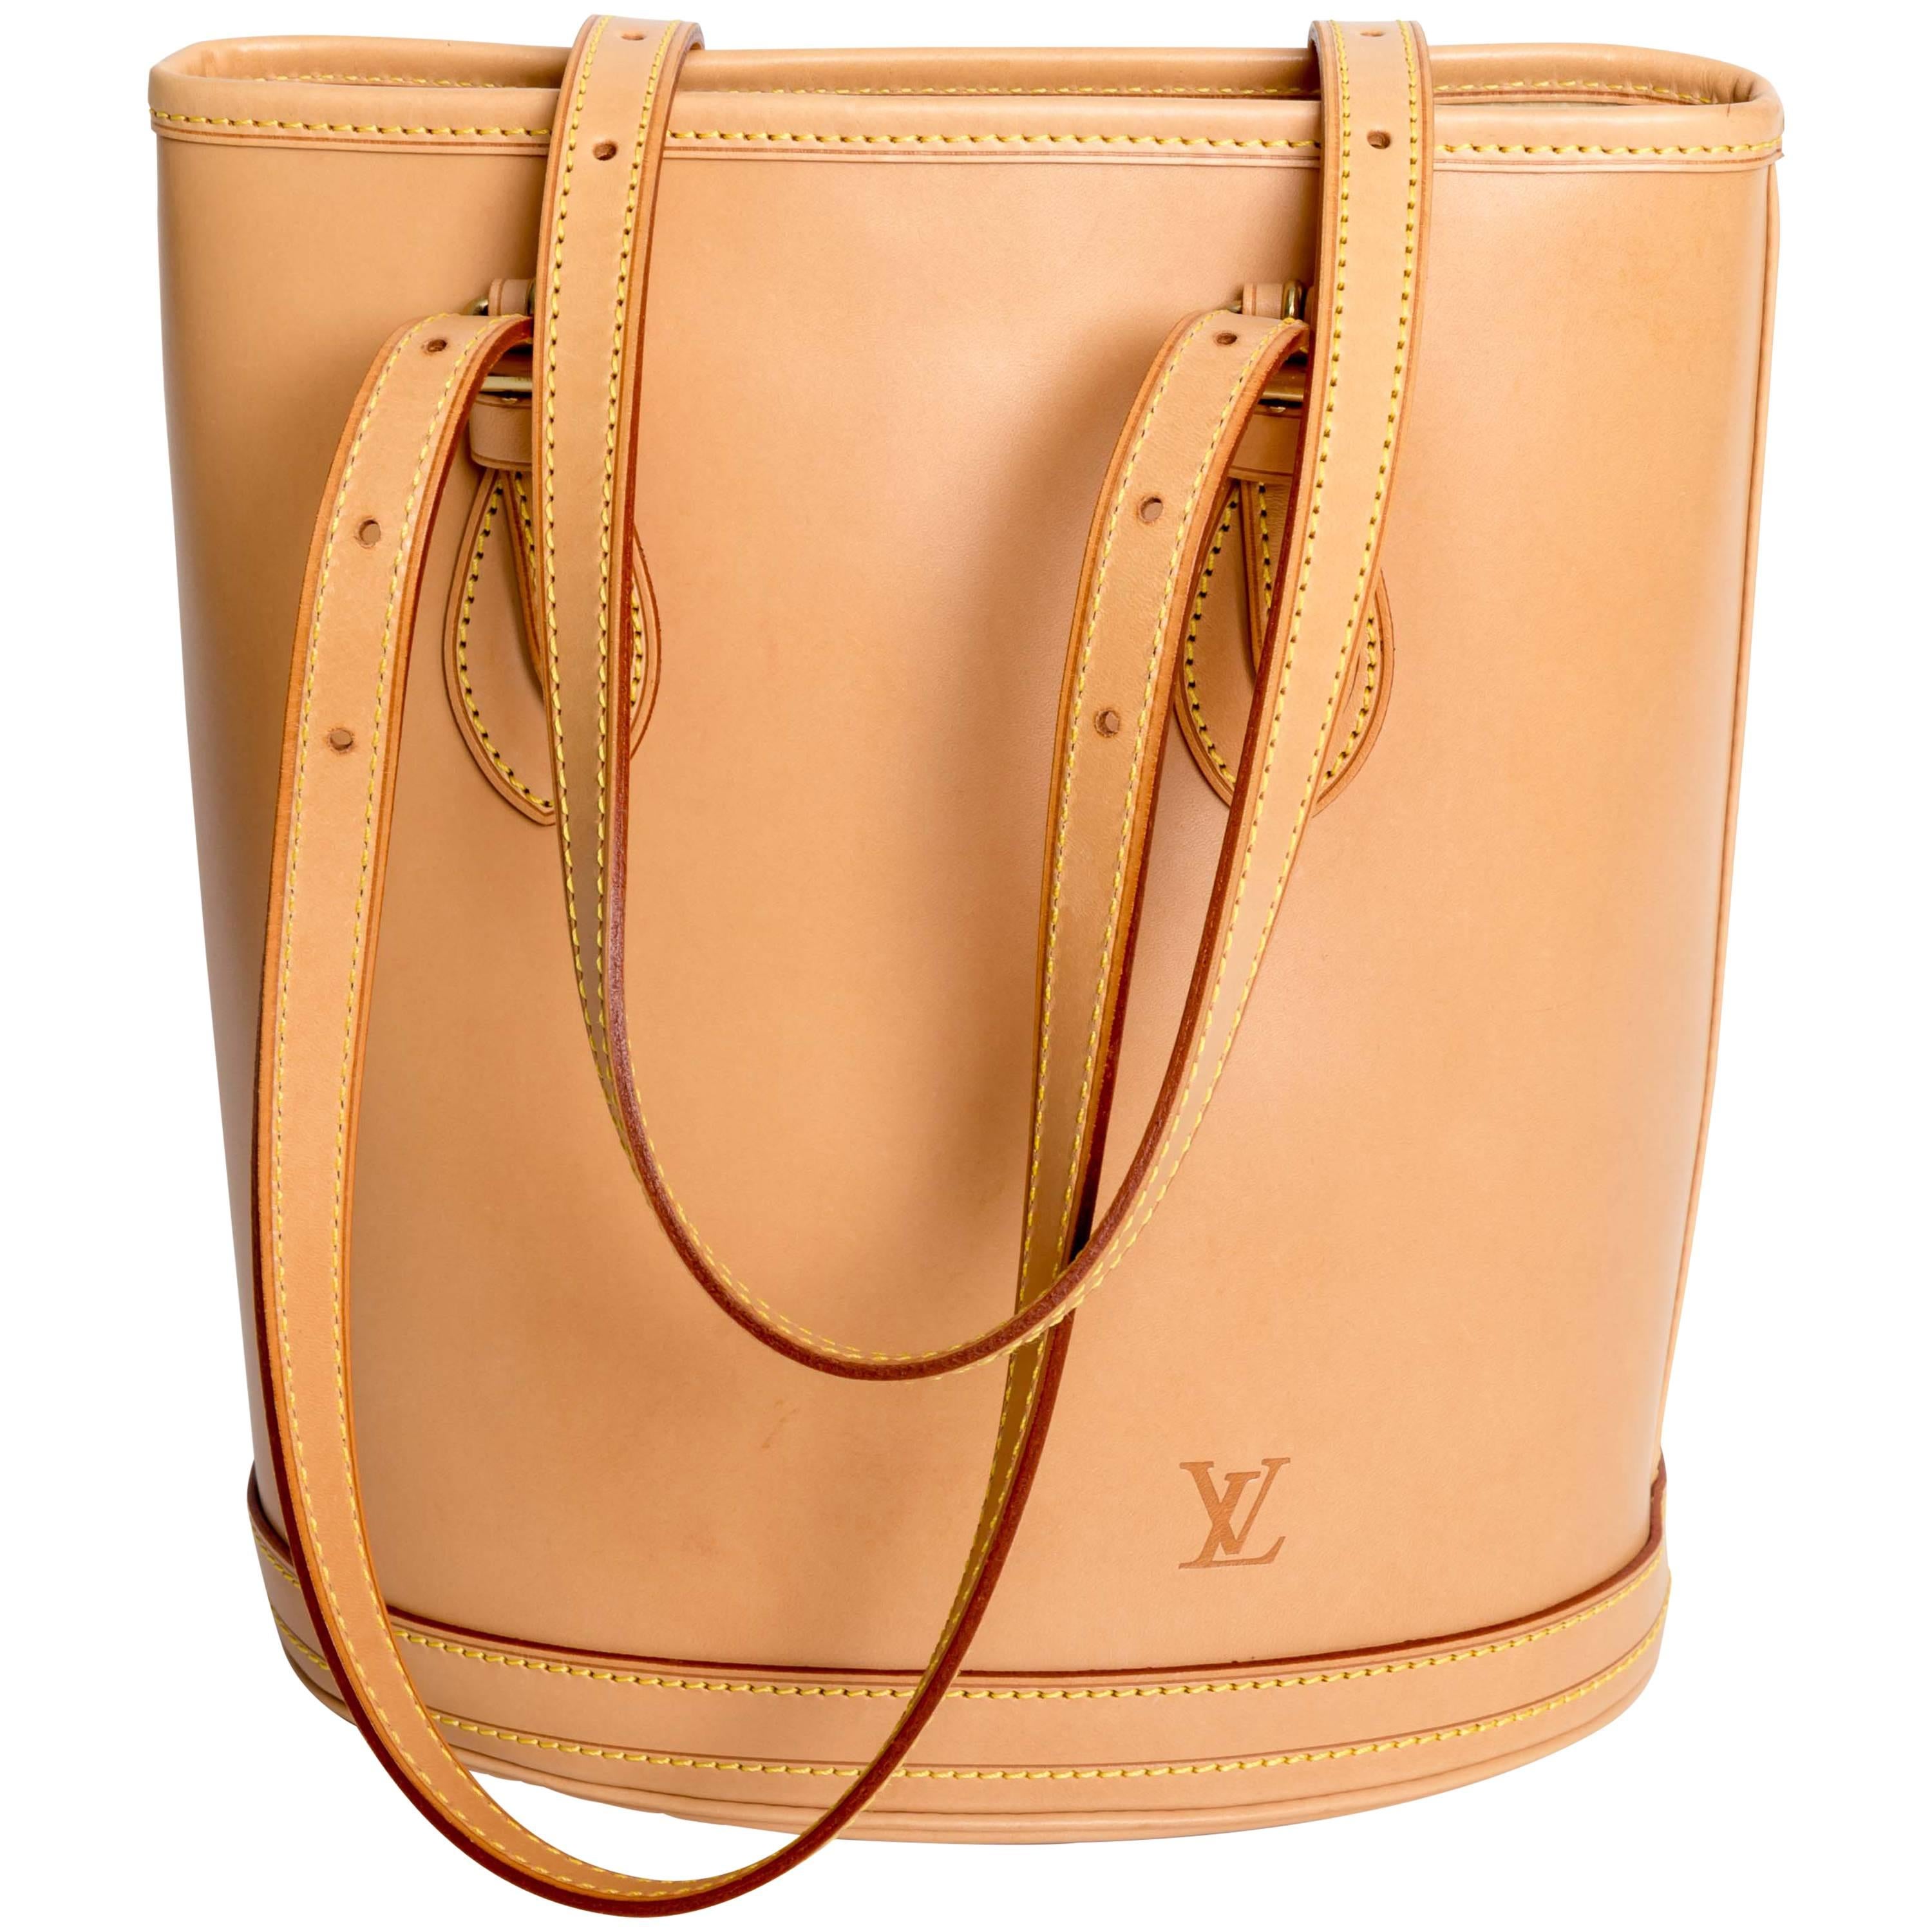   Louis Vuitton Petit Bucket Bag in Tan Vachetta Leather Commemorative Edition